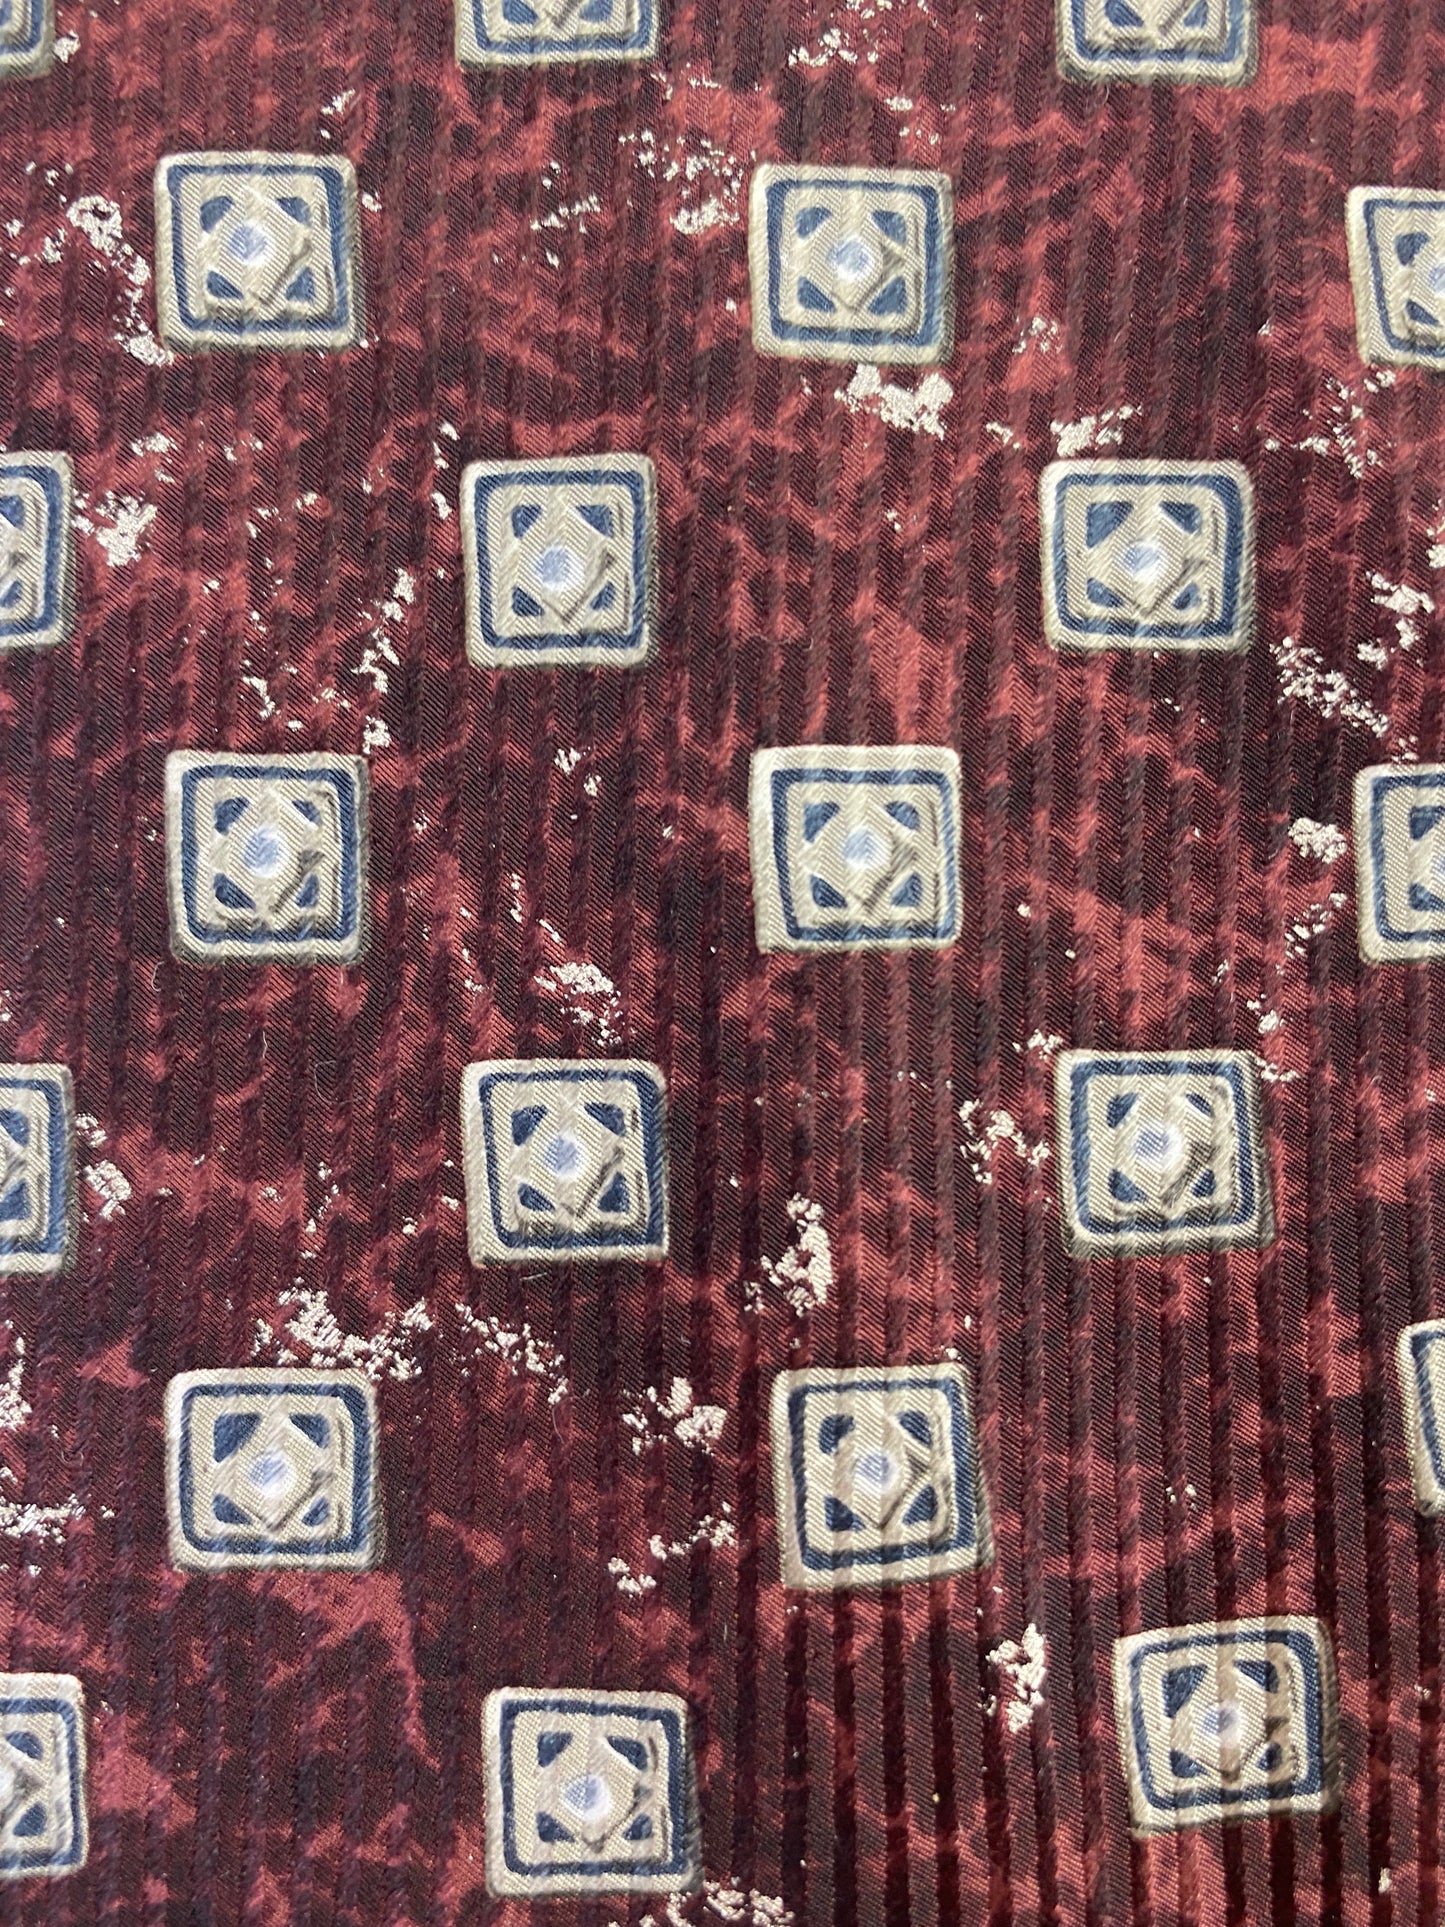 90s Deadstock Silk Necktie, Men's Vintage Brown-Wine Square Tile Pattern Tie, NOS